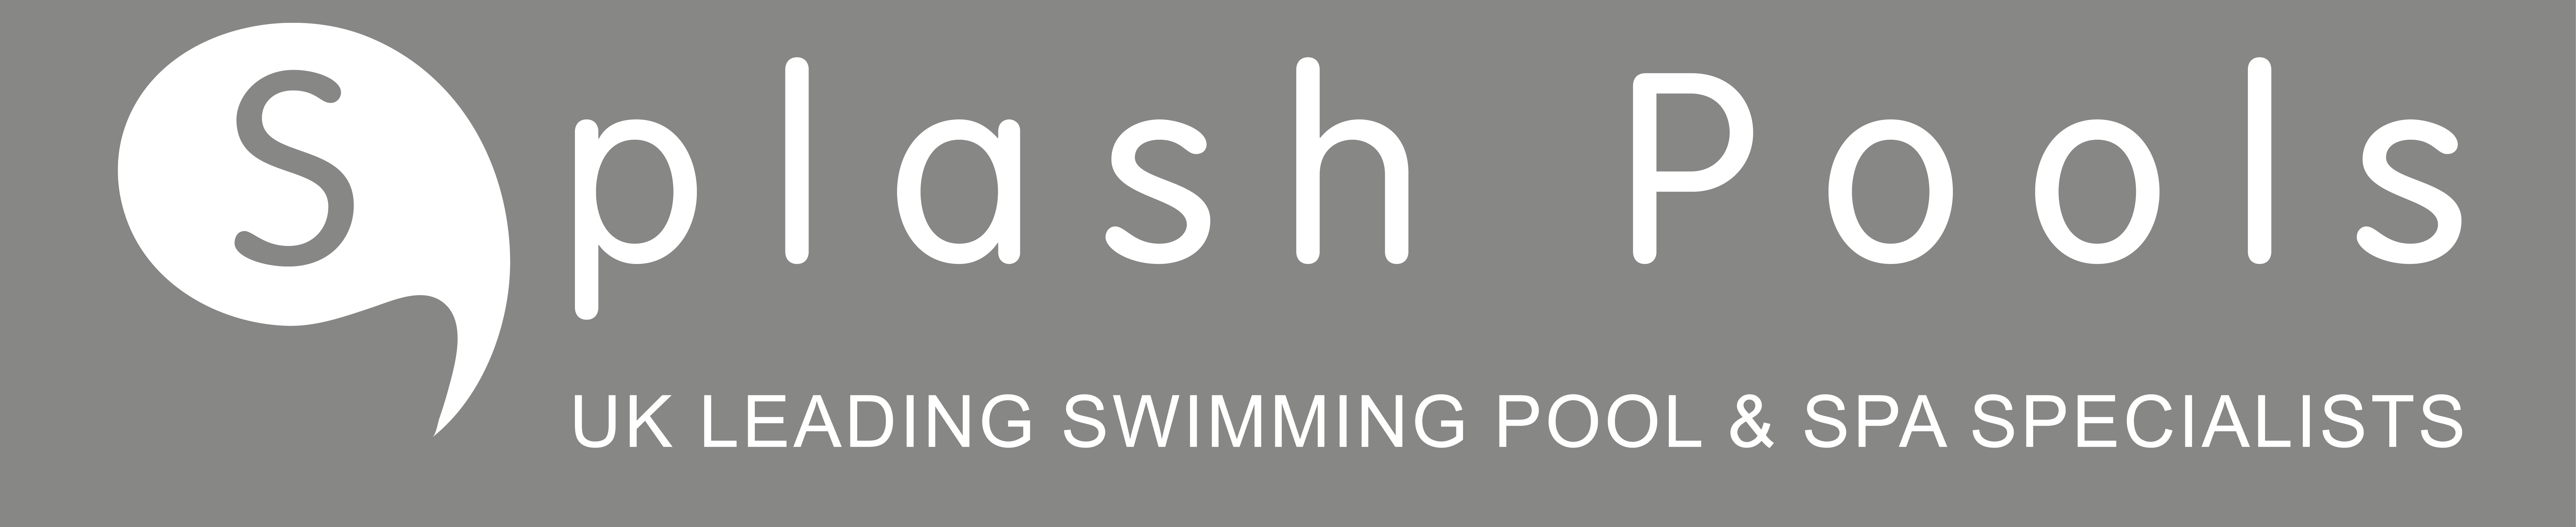 Splash Pools Ltd